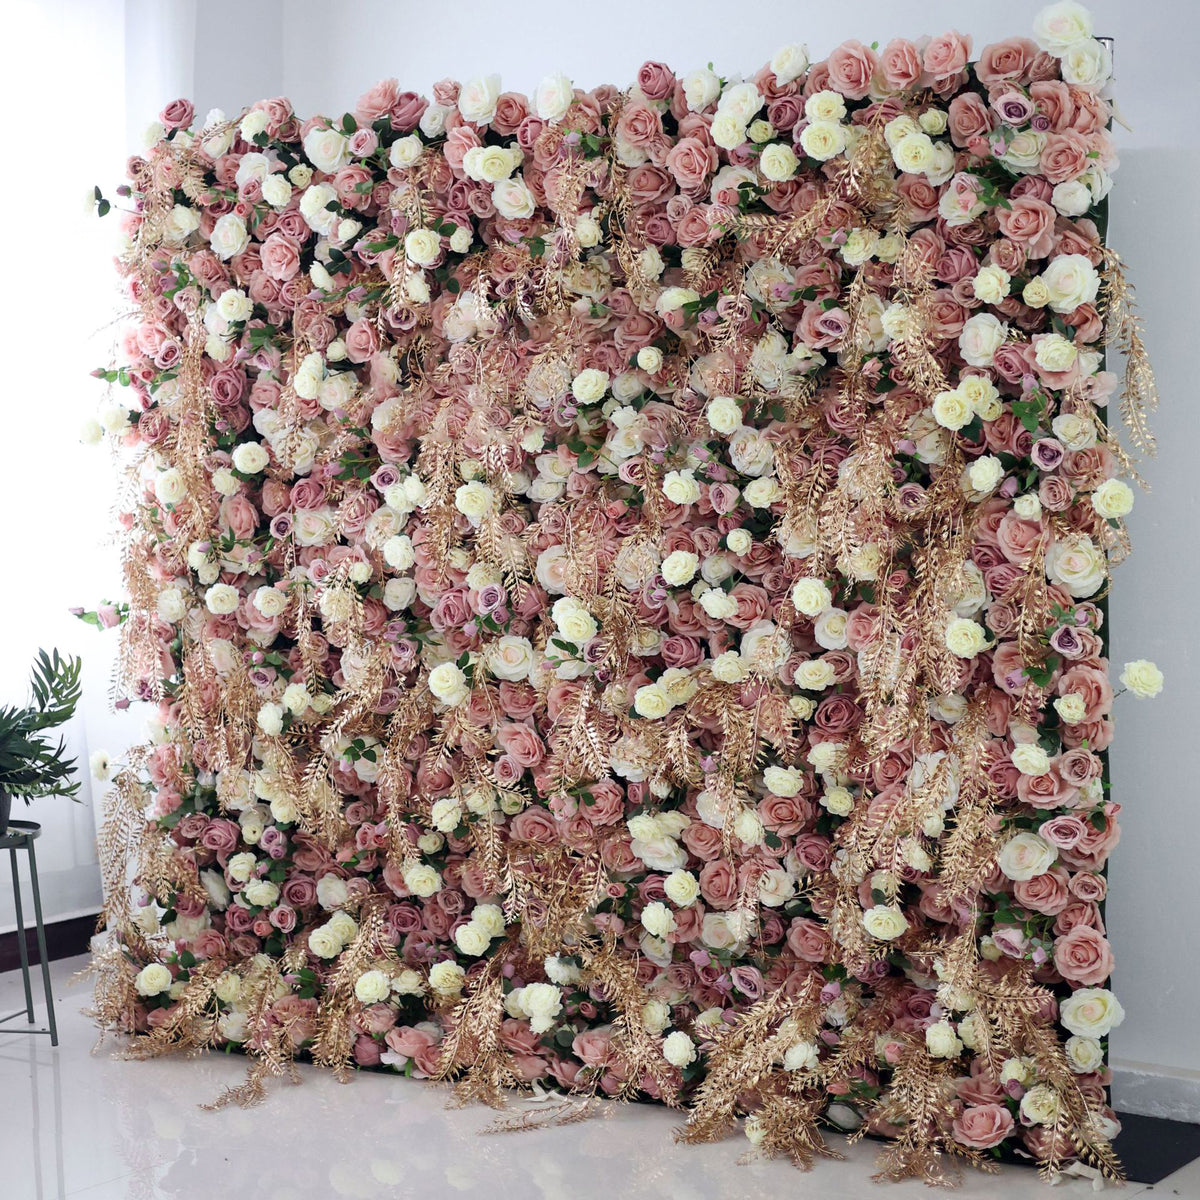 3D Artificial Flower Wall Arrangement Wedding Party Birthday Backdrop Decor HQ1188